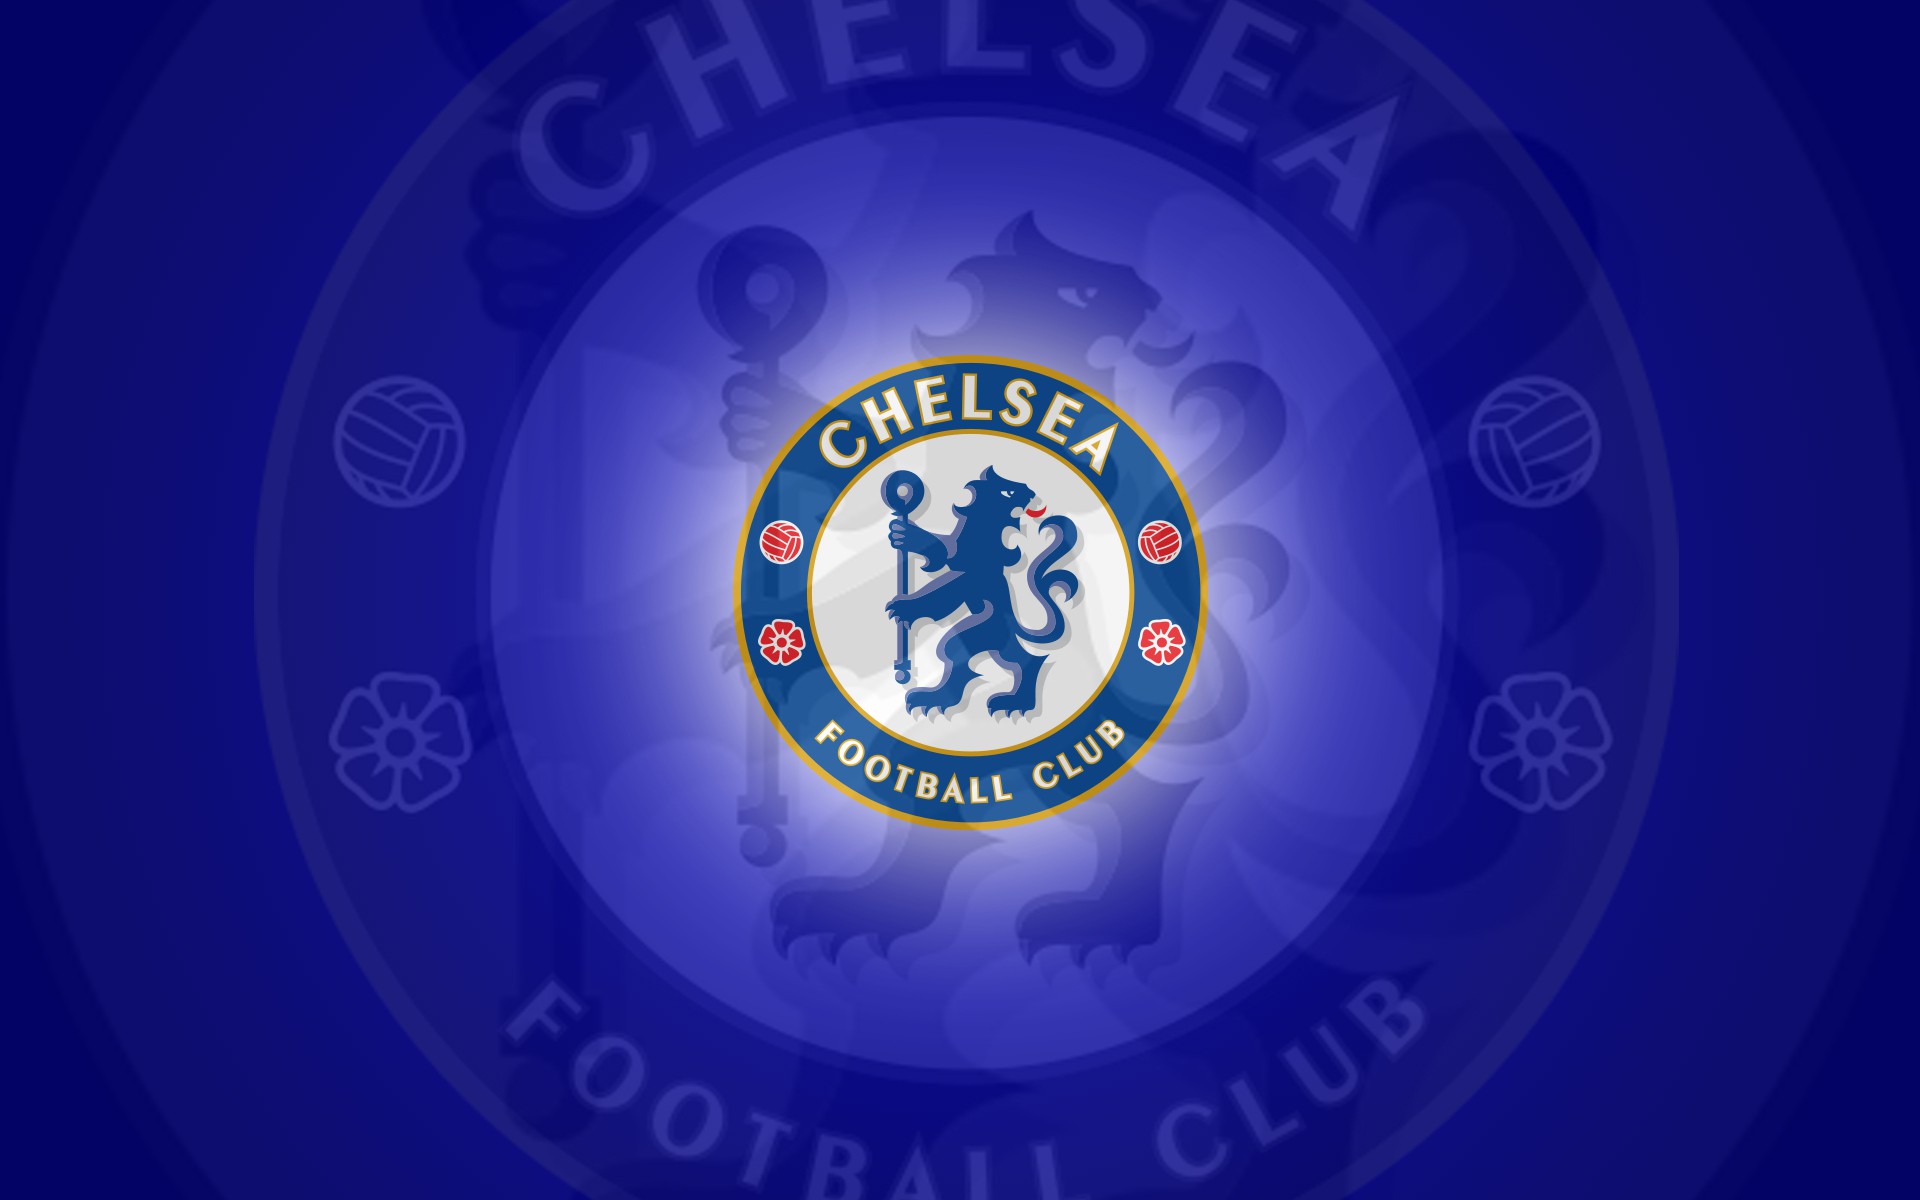 Chelsea Football Club Wallpaper New HD